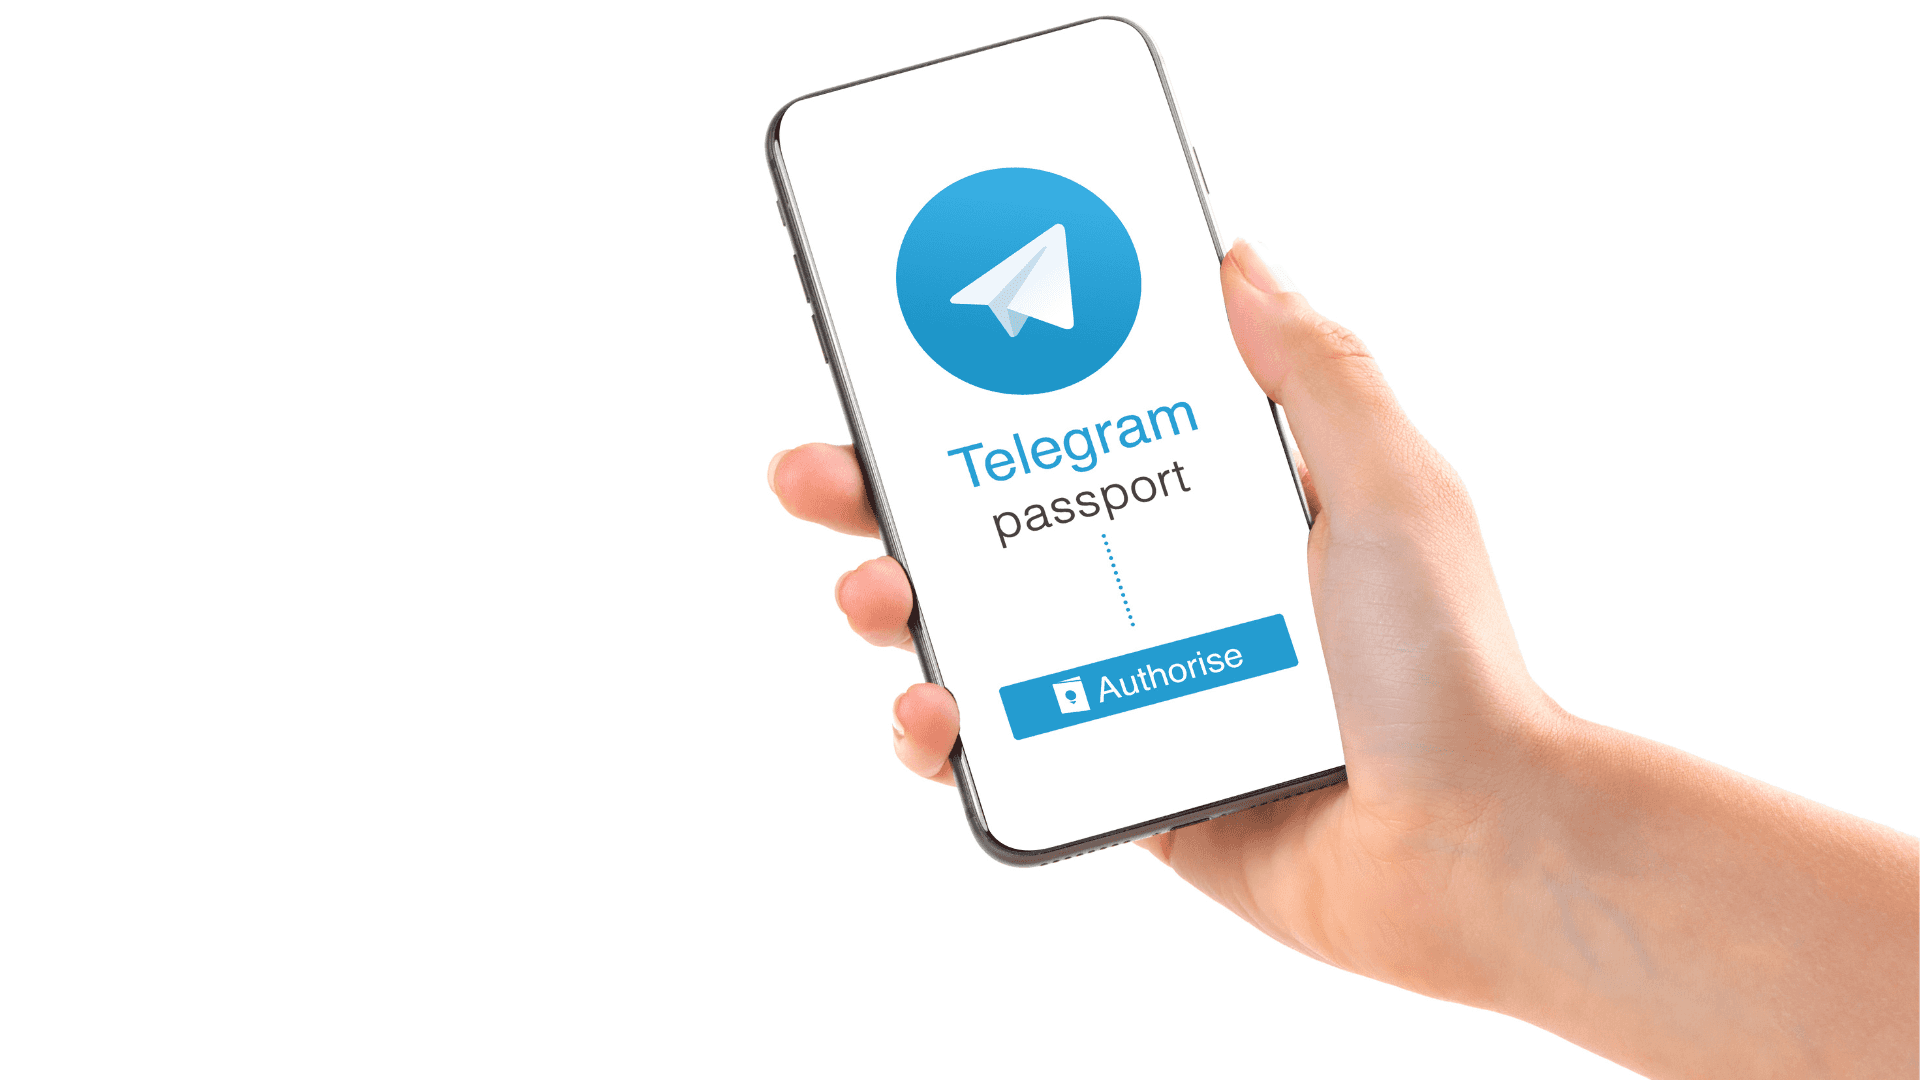 Enperson Holder En Smartphone Med En Telegram-app På Den.